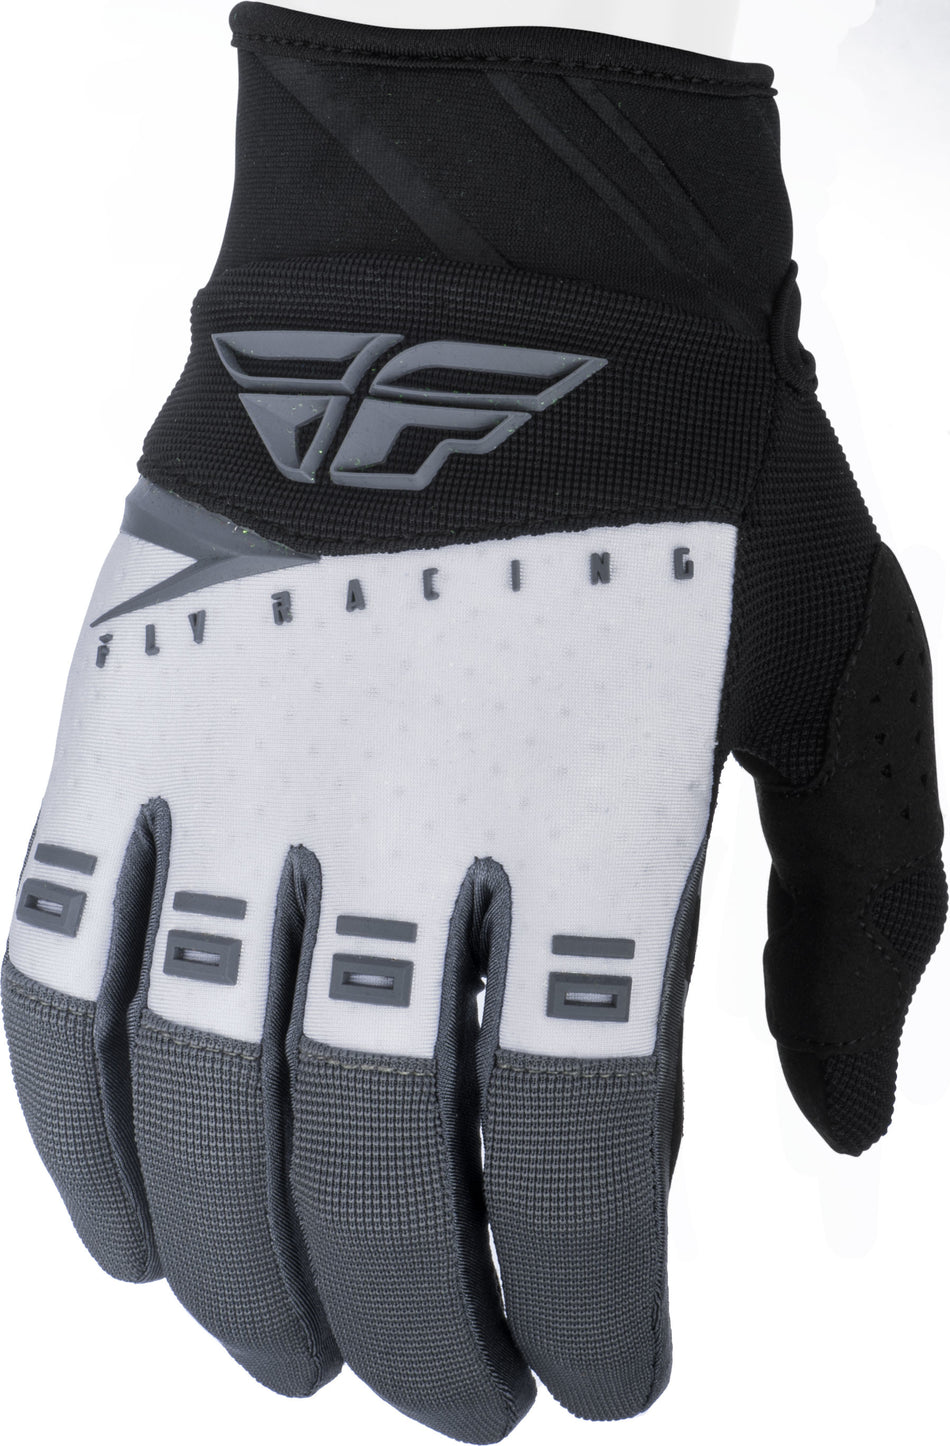 FLY RACING F-16 Gloves Black/White/Grey Sz 01 372-91001